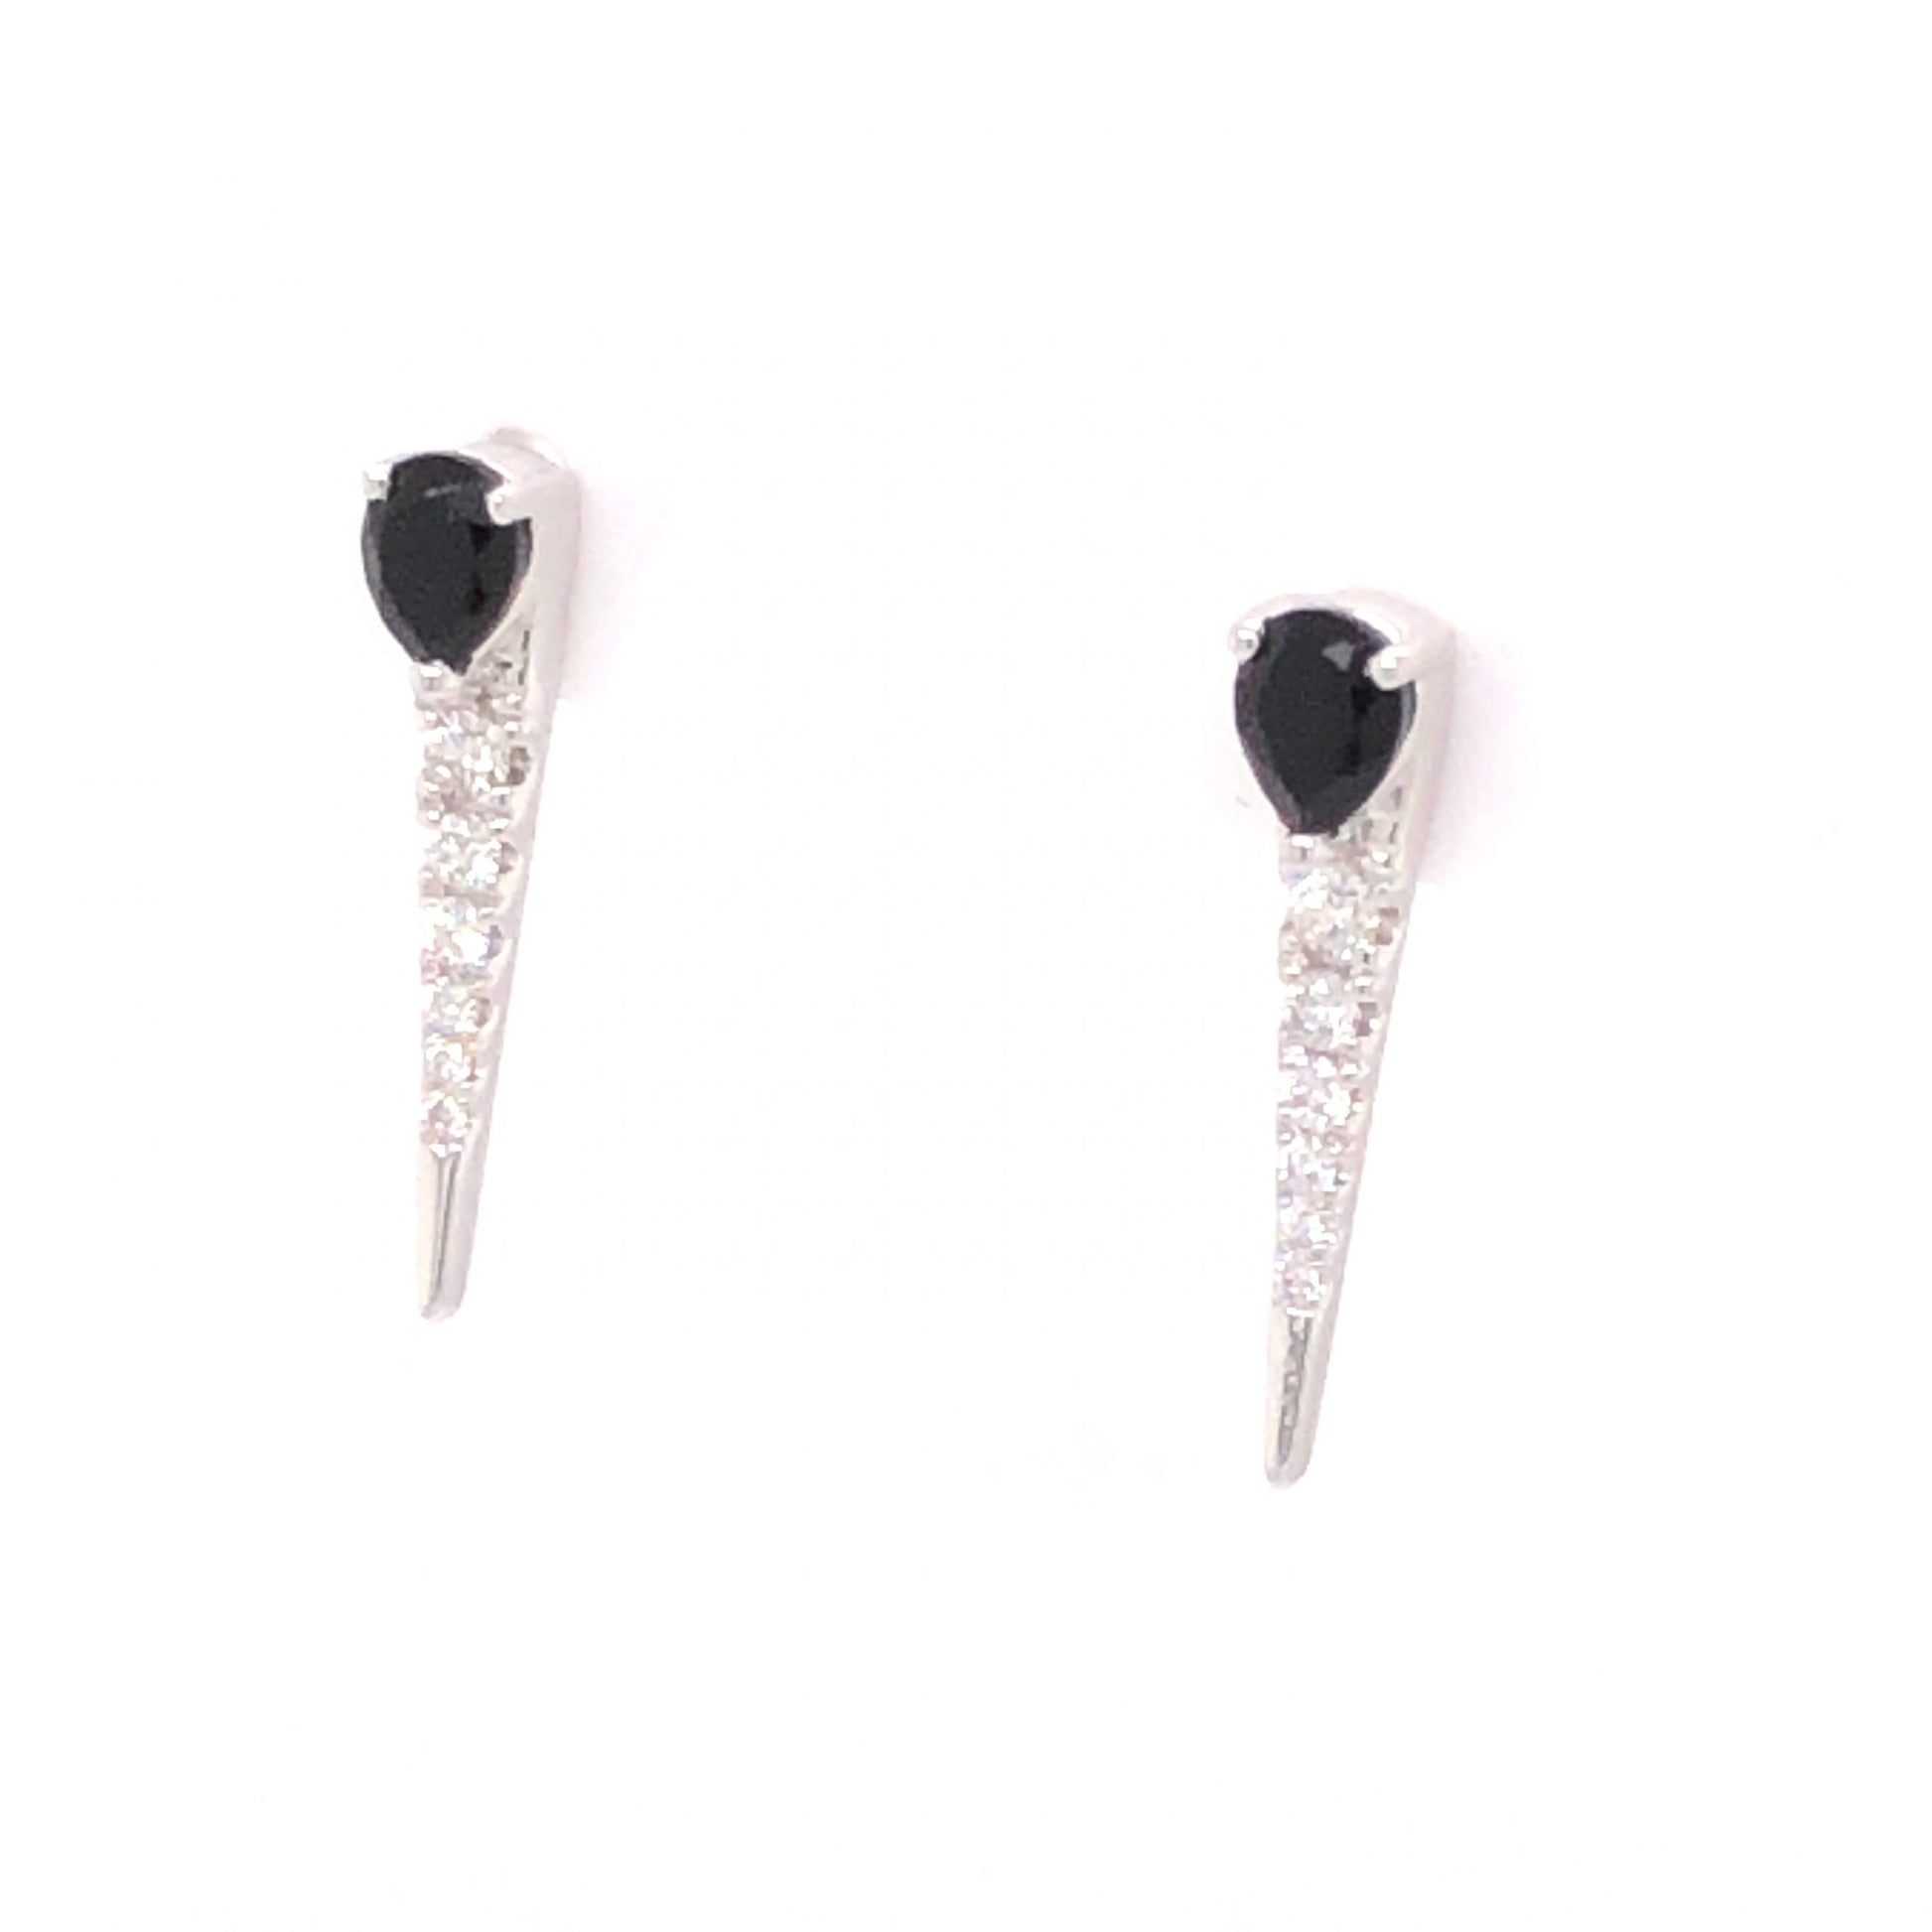 .13 Diamond & Onyx Earrings in 14k White Gold